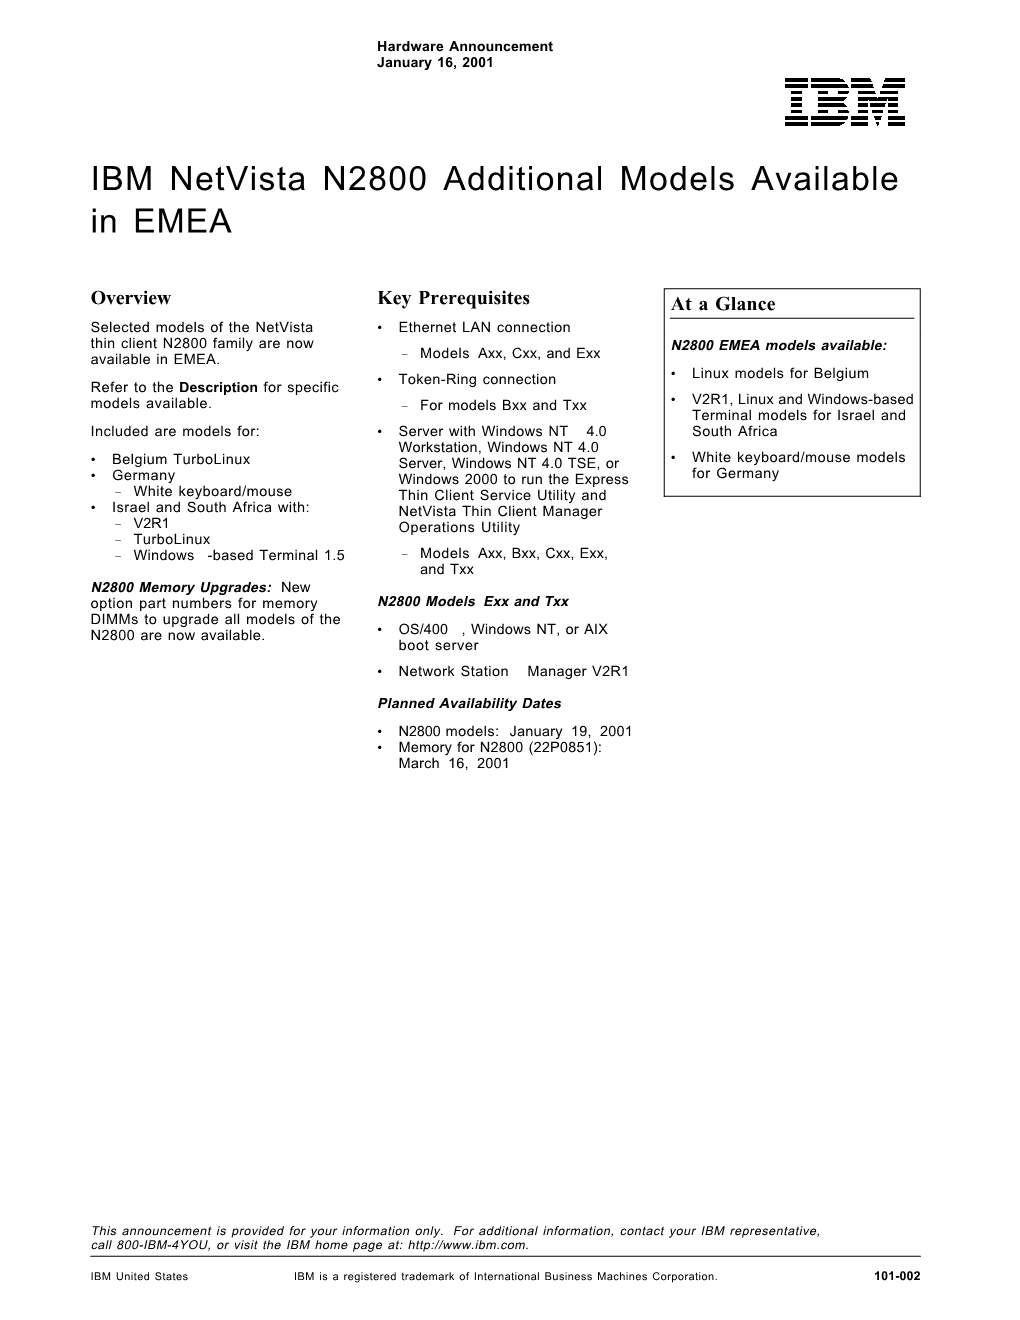 IBM Netvista N2800 Additional Models Available in EMEA